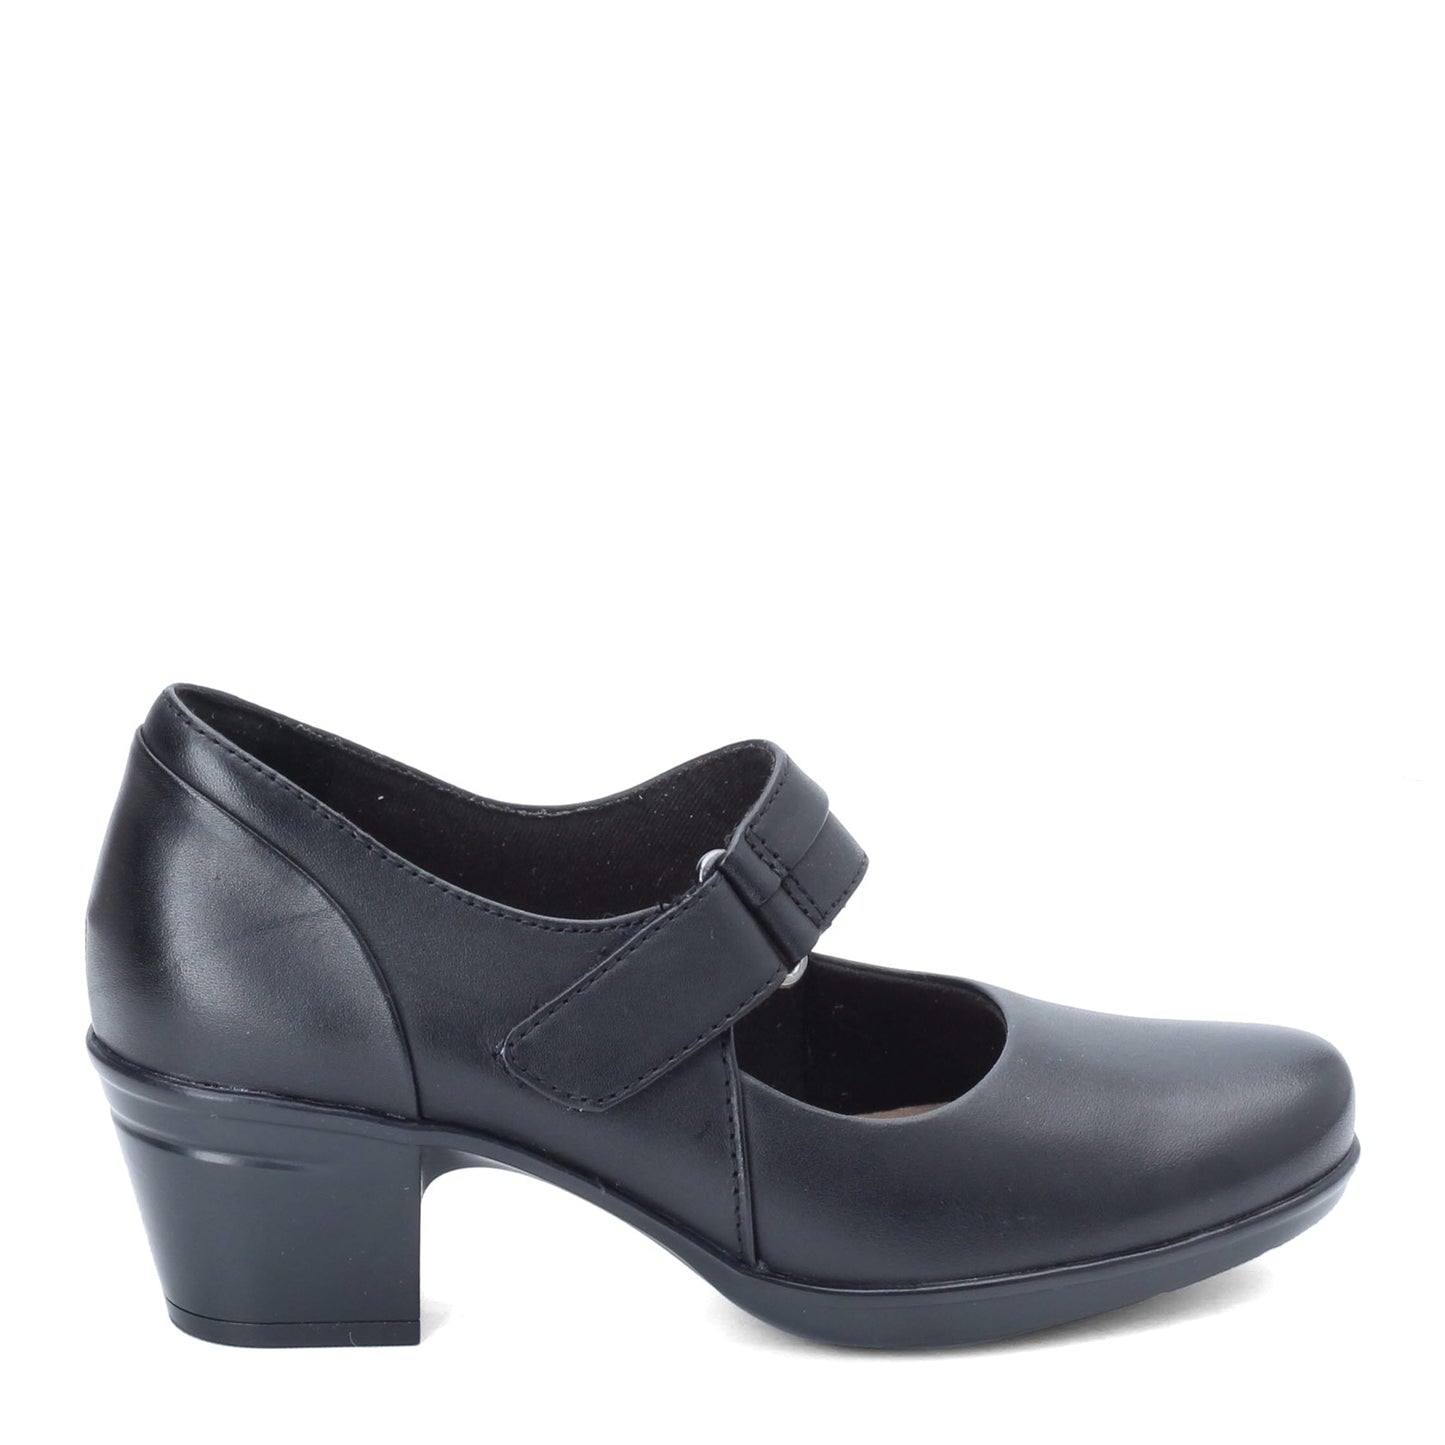 Peltz Shoes  Women's Clarks Emslie Lulin Pump BLACK 26129221